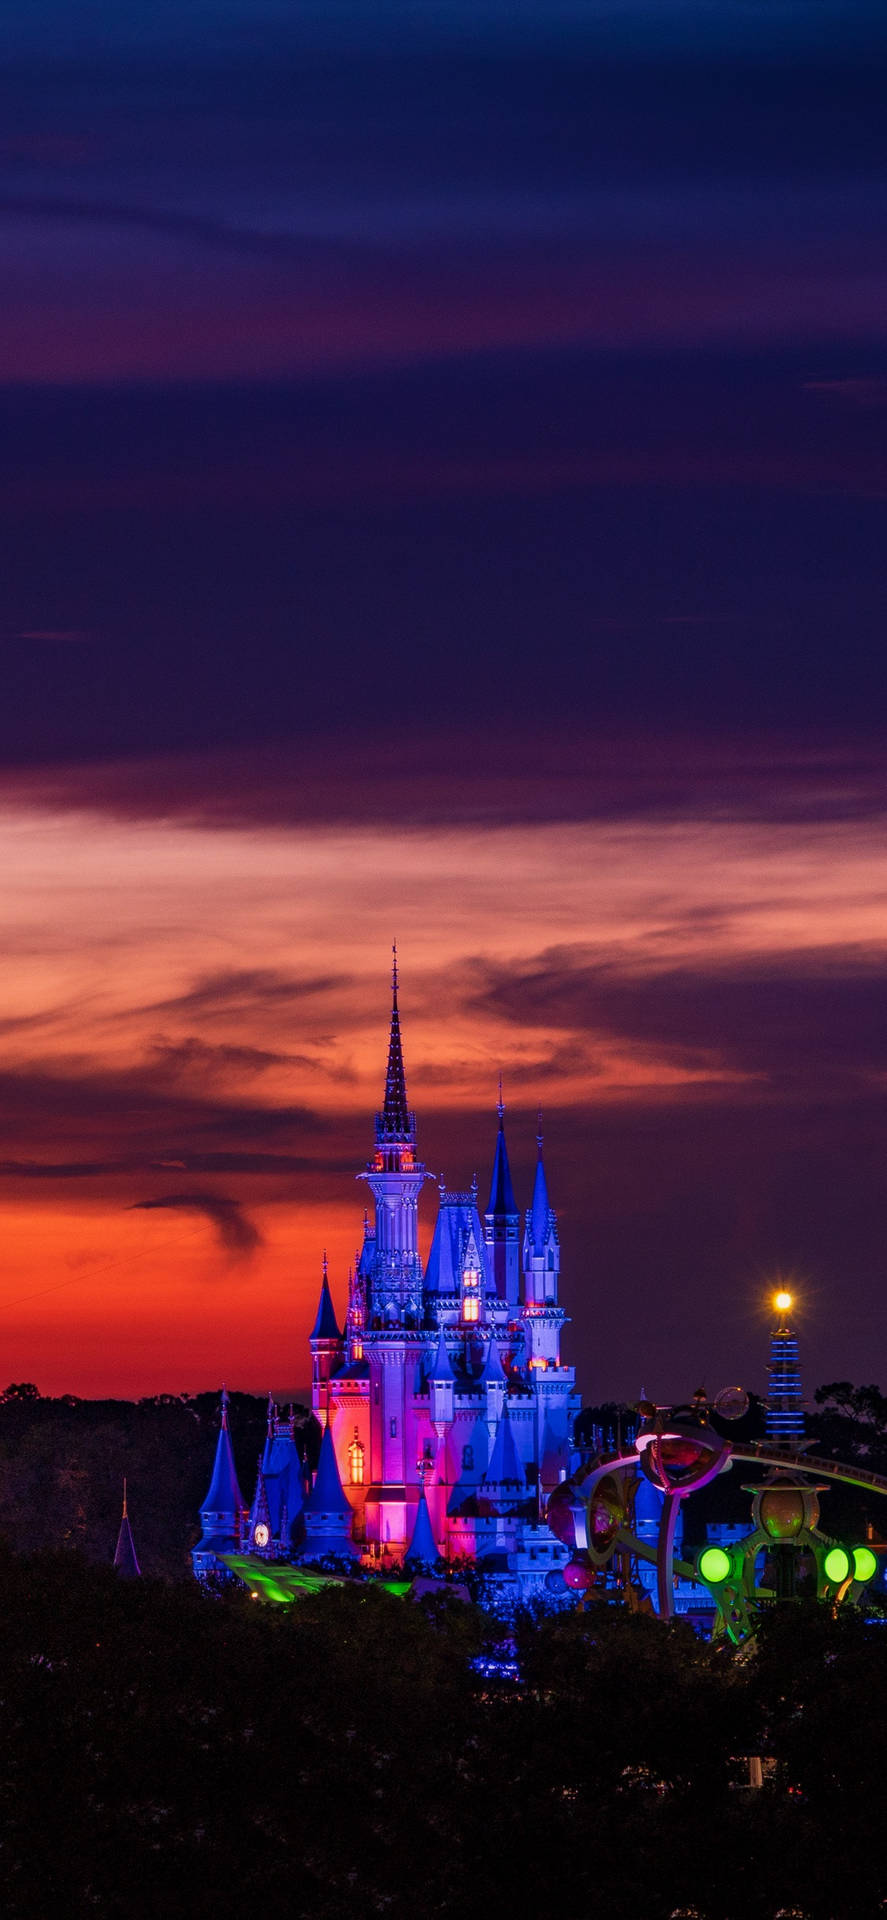 Disney Castle At Night Disney Iphone Background